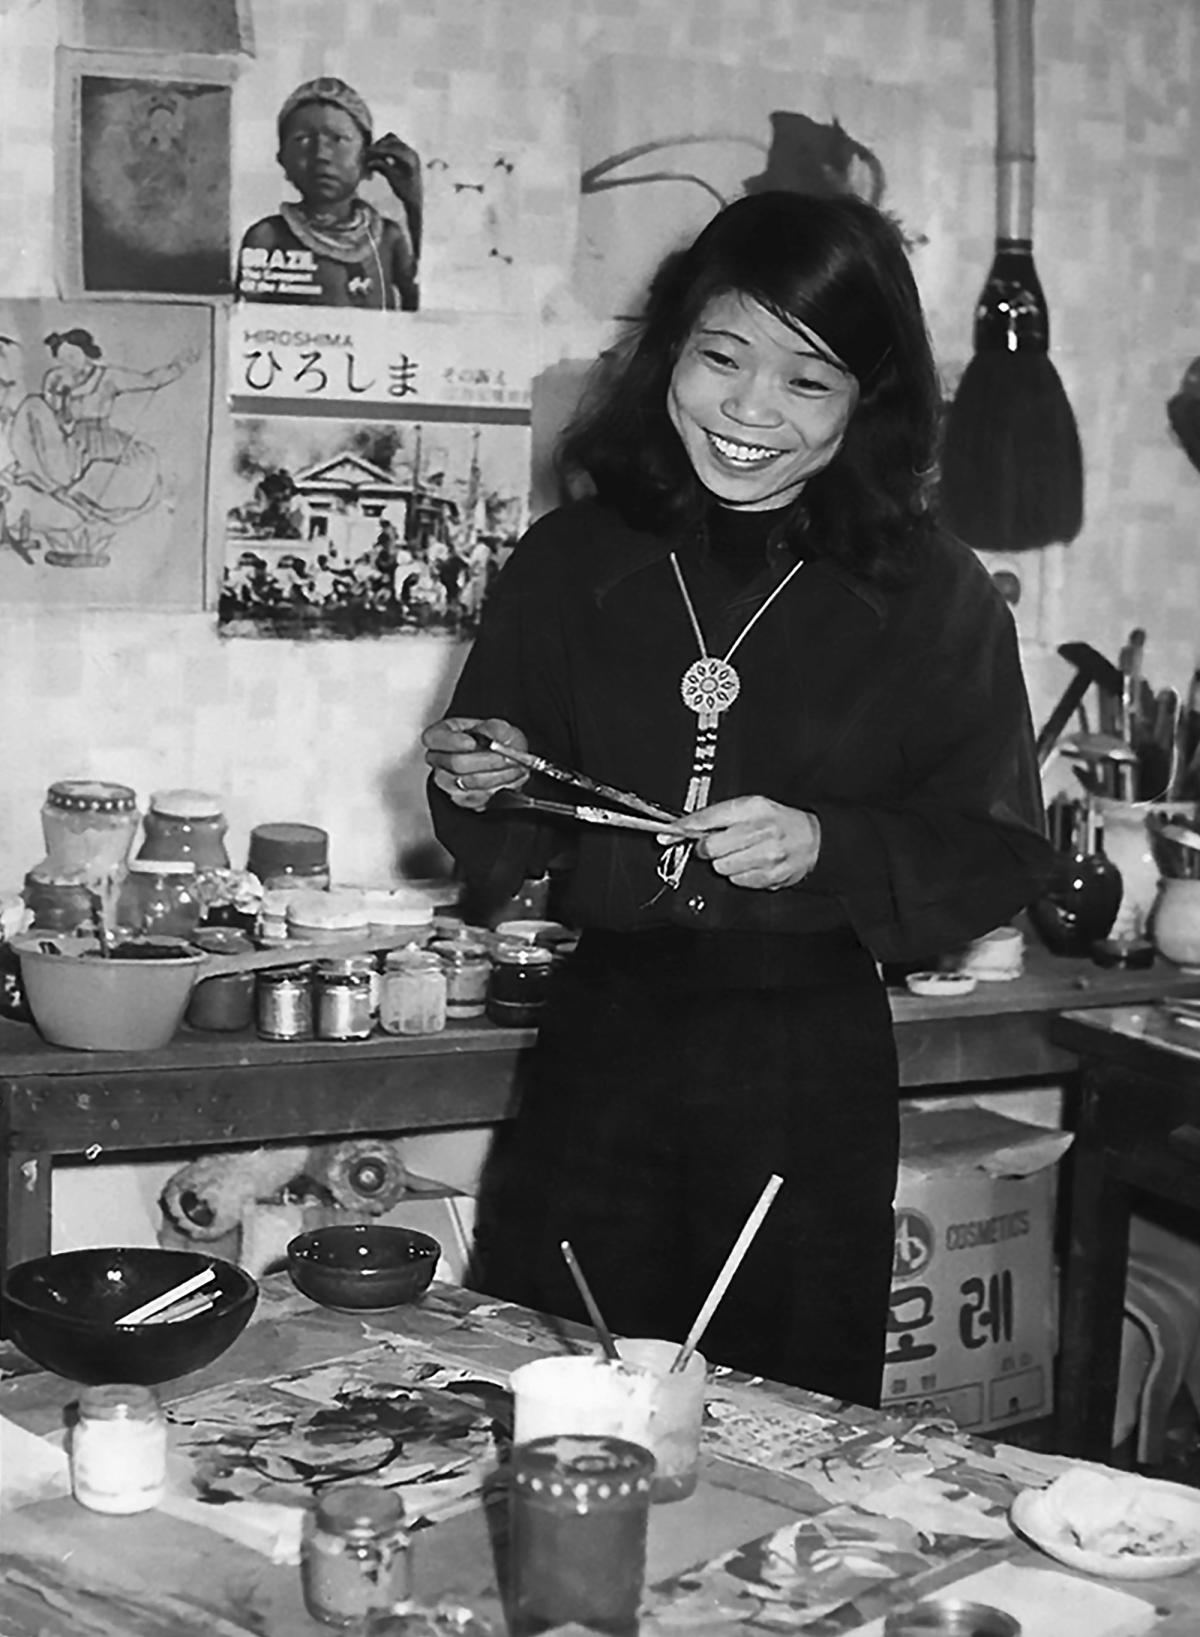 Wook-kyung Choi travaillant dans son atelier, en 1973. Courtesy de l’Estate. ©Kukje Gallery, DR